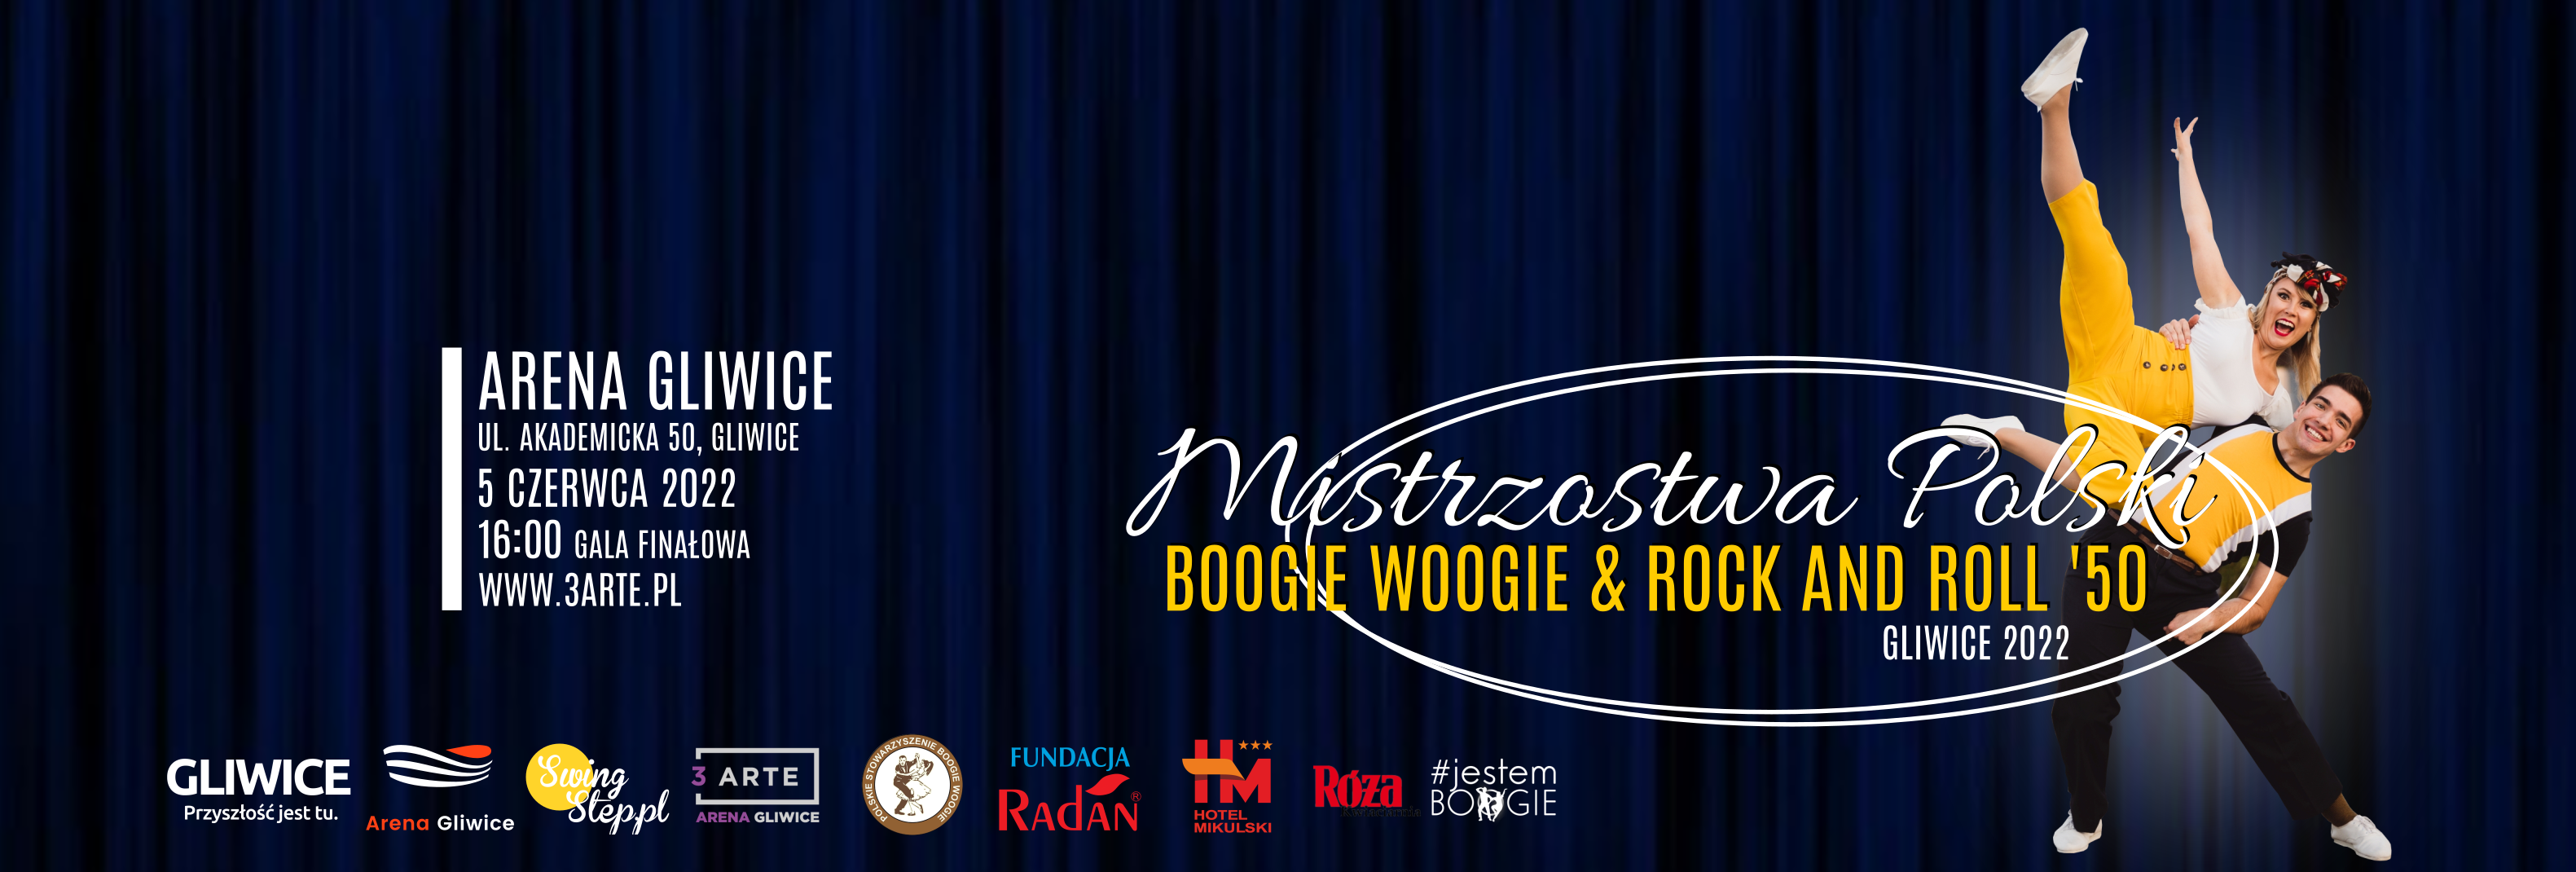 Mistrzostwa Polski Boogie Woogie & Rock'n'Roll